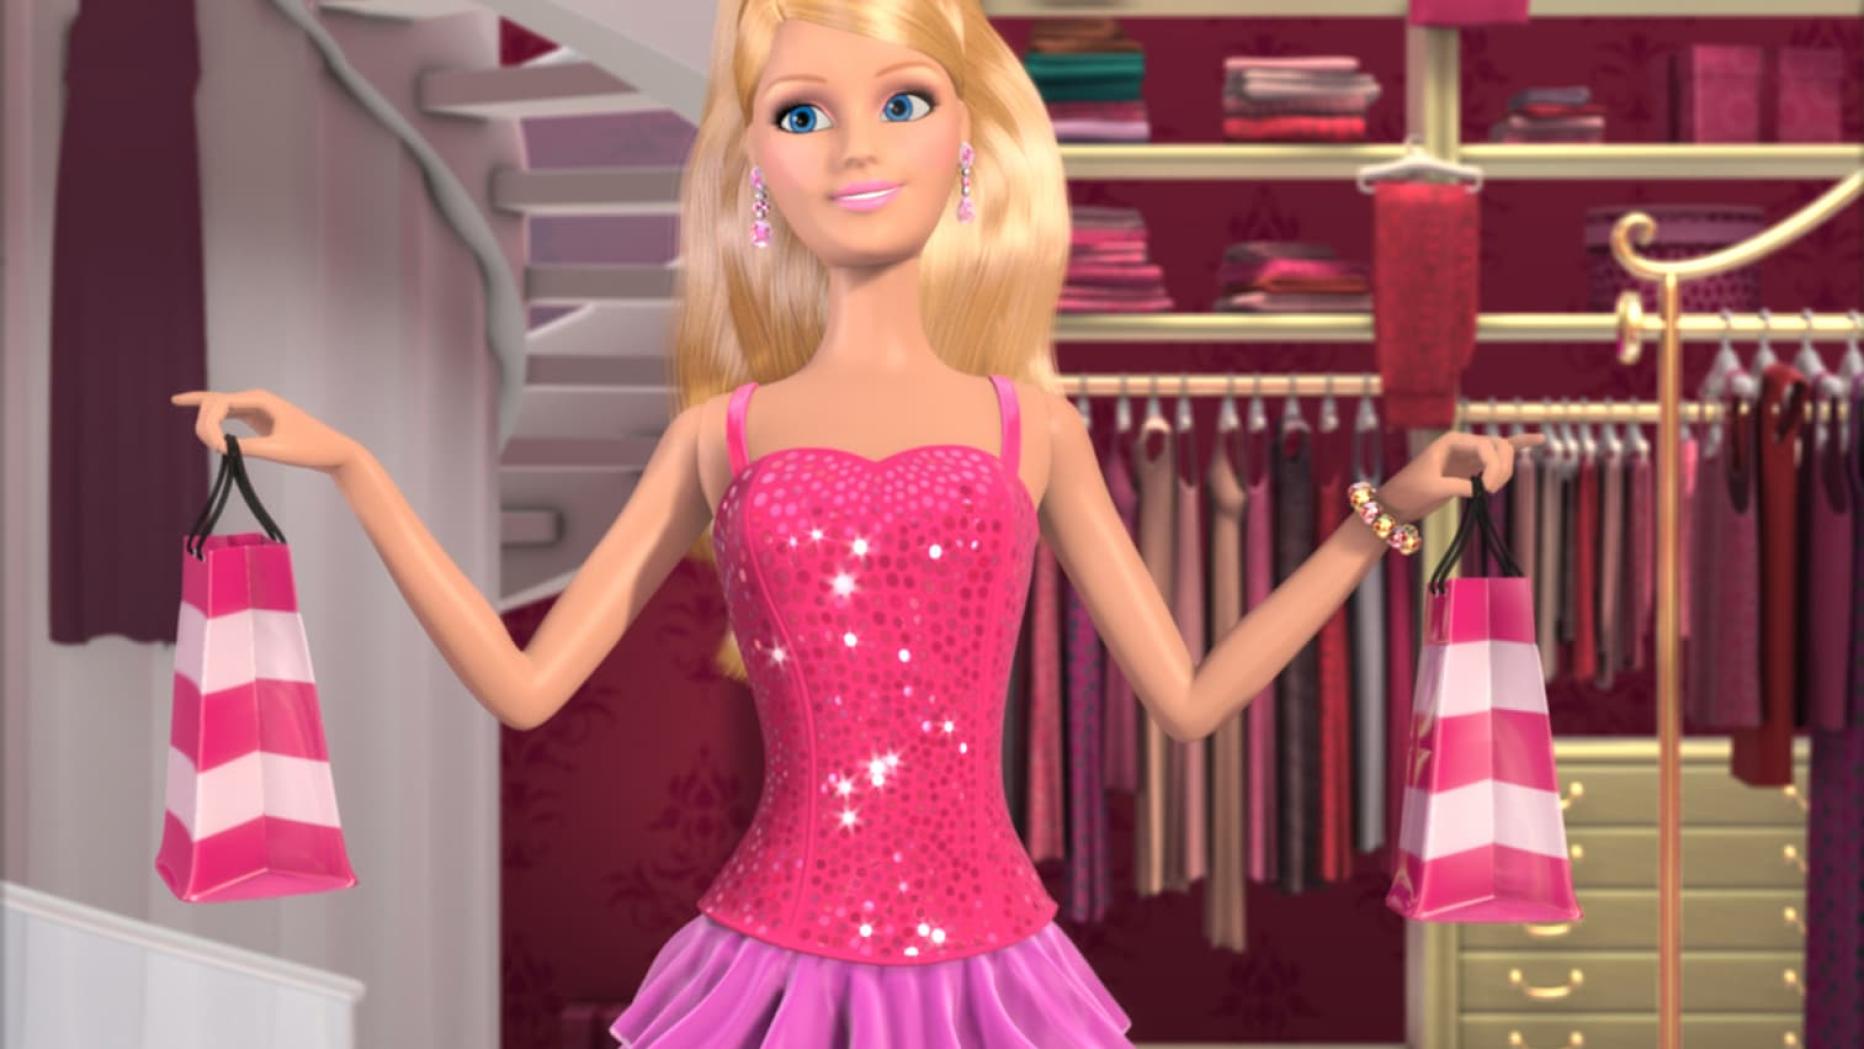 Барби дом взломка. Барби Дрим Хаус игра. Барби жизнь в доме мечты игра. Барби: жизнь в доме мечты (2012). Кукла Барби жизнь в доме мечты.